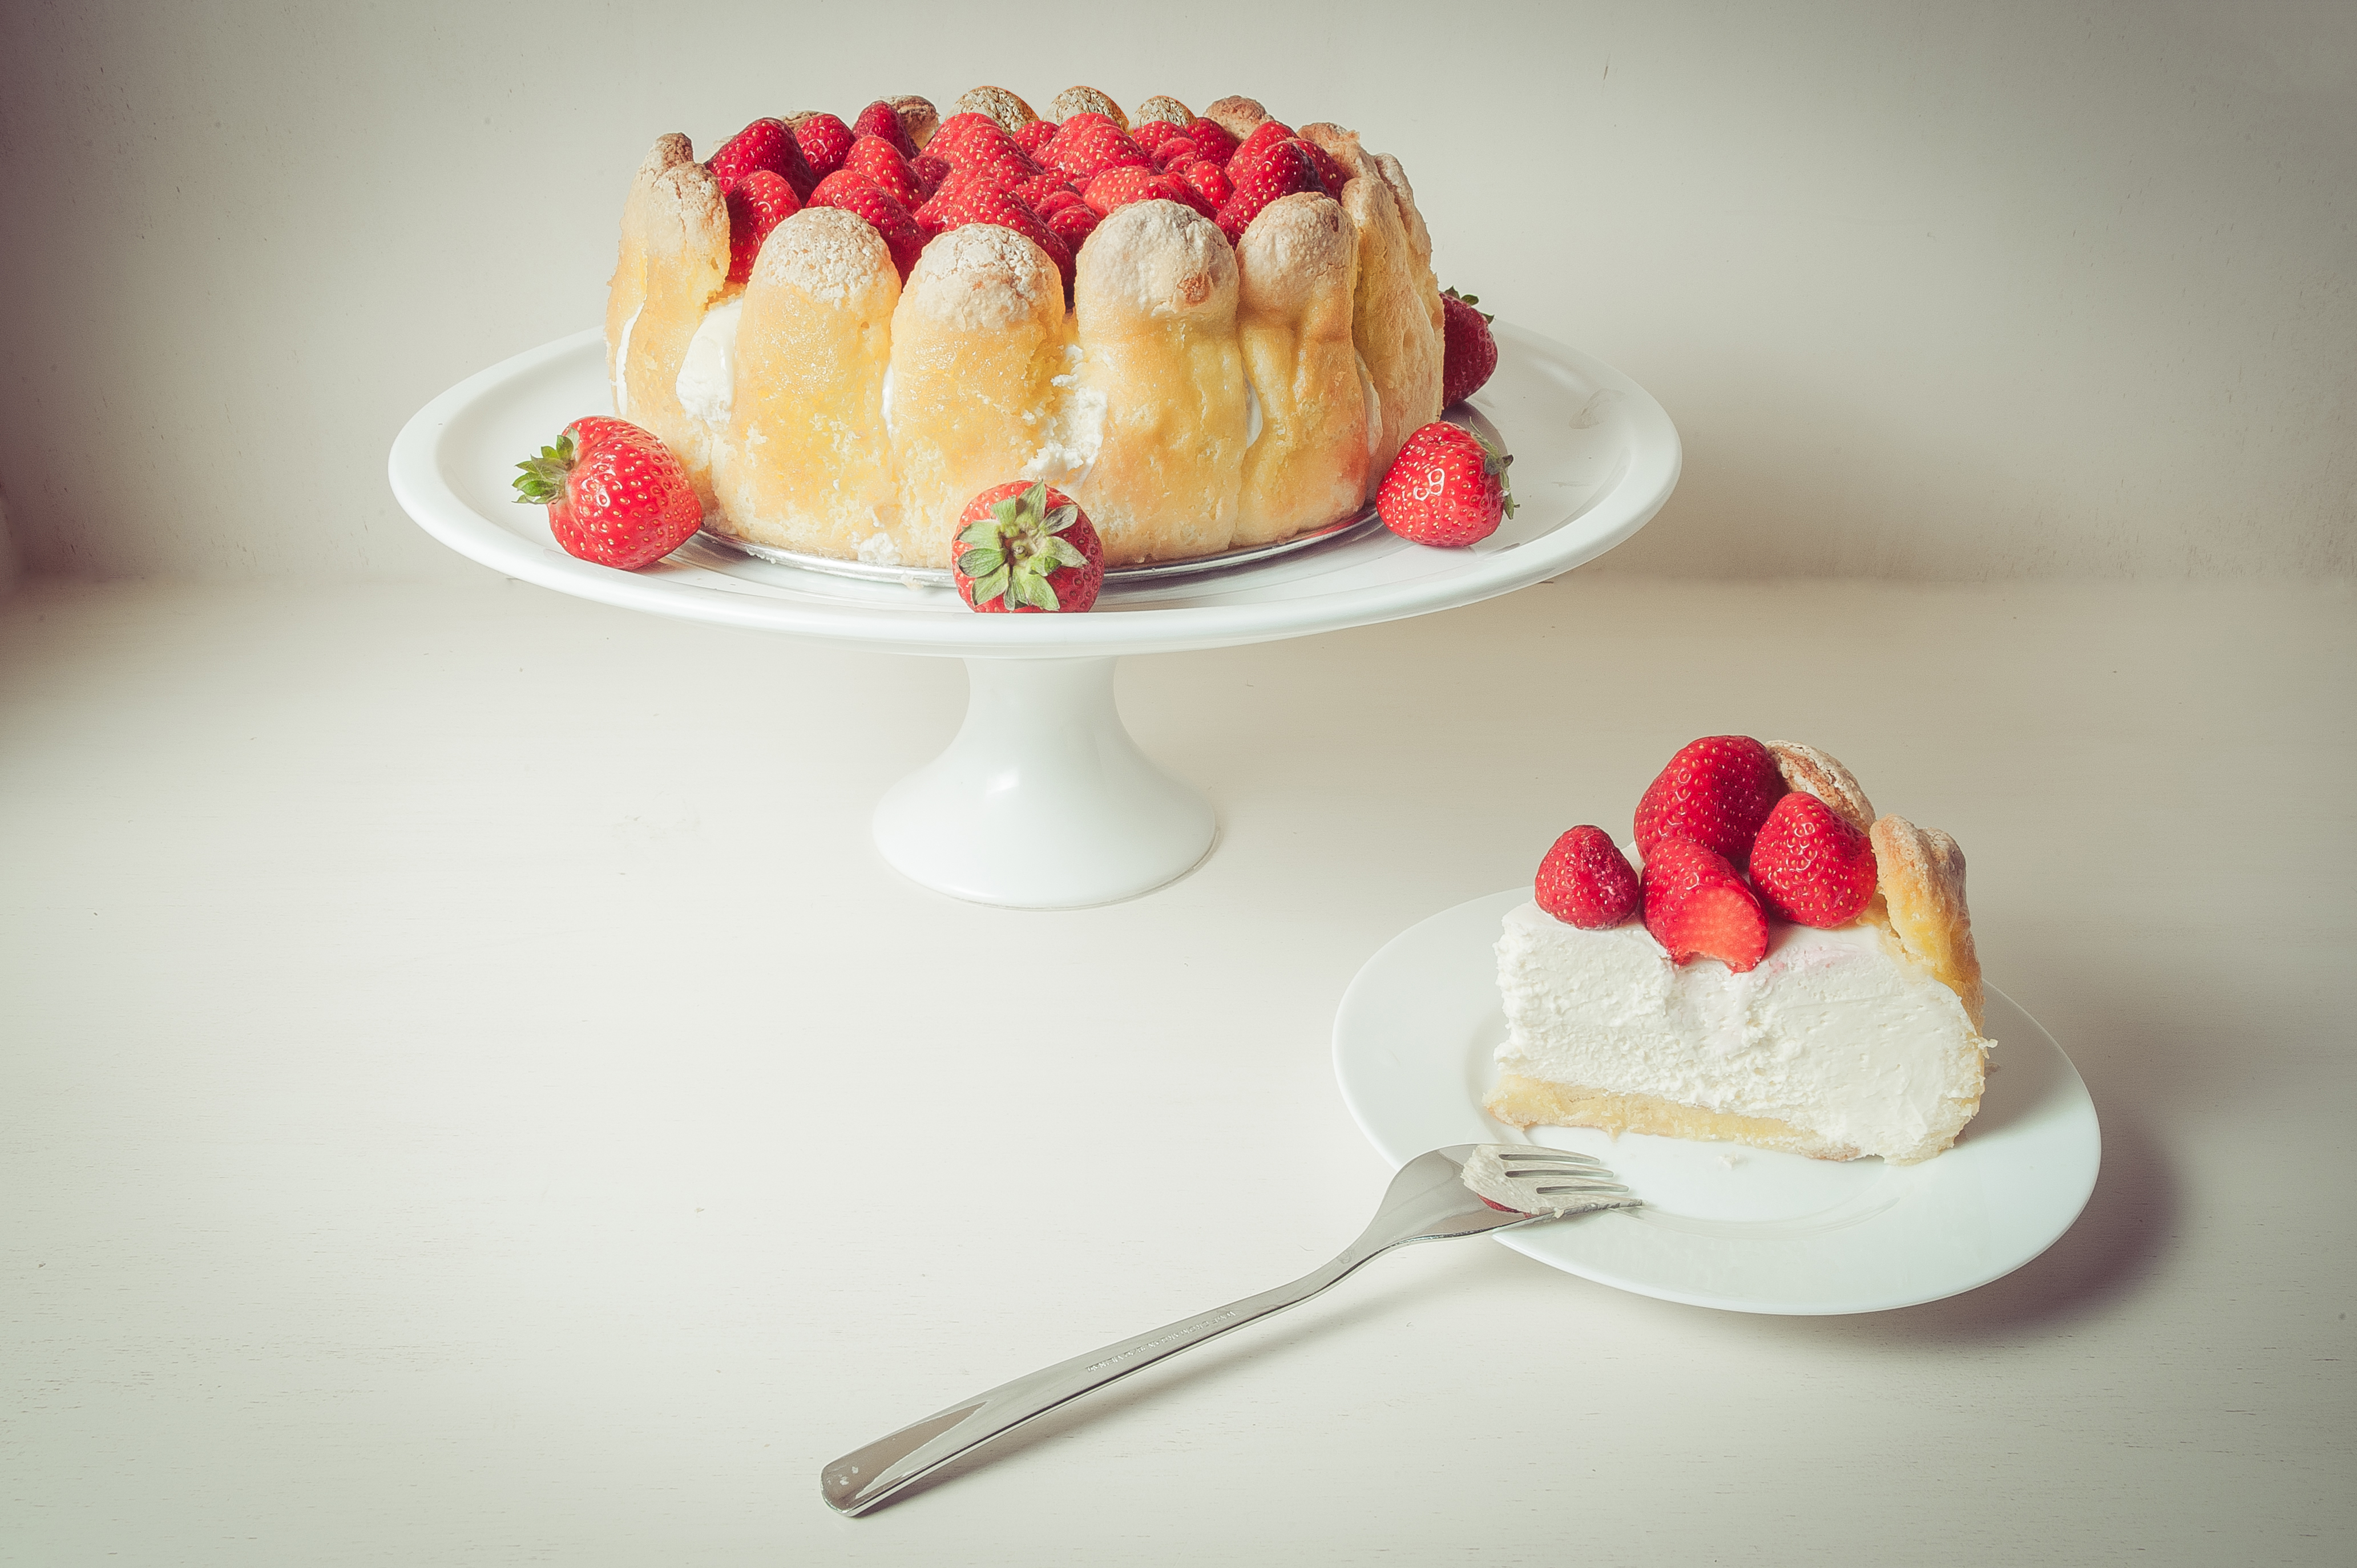 еда торт вилка клубника food cake fork strawberry загрузить